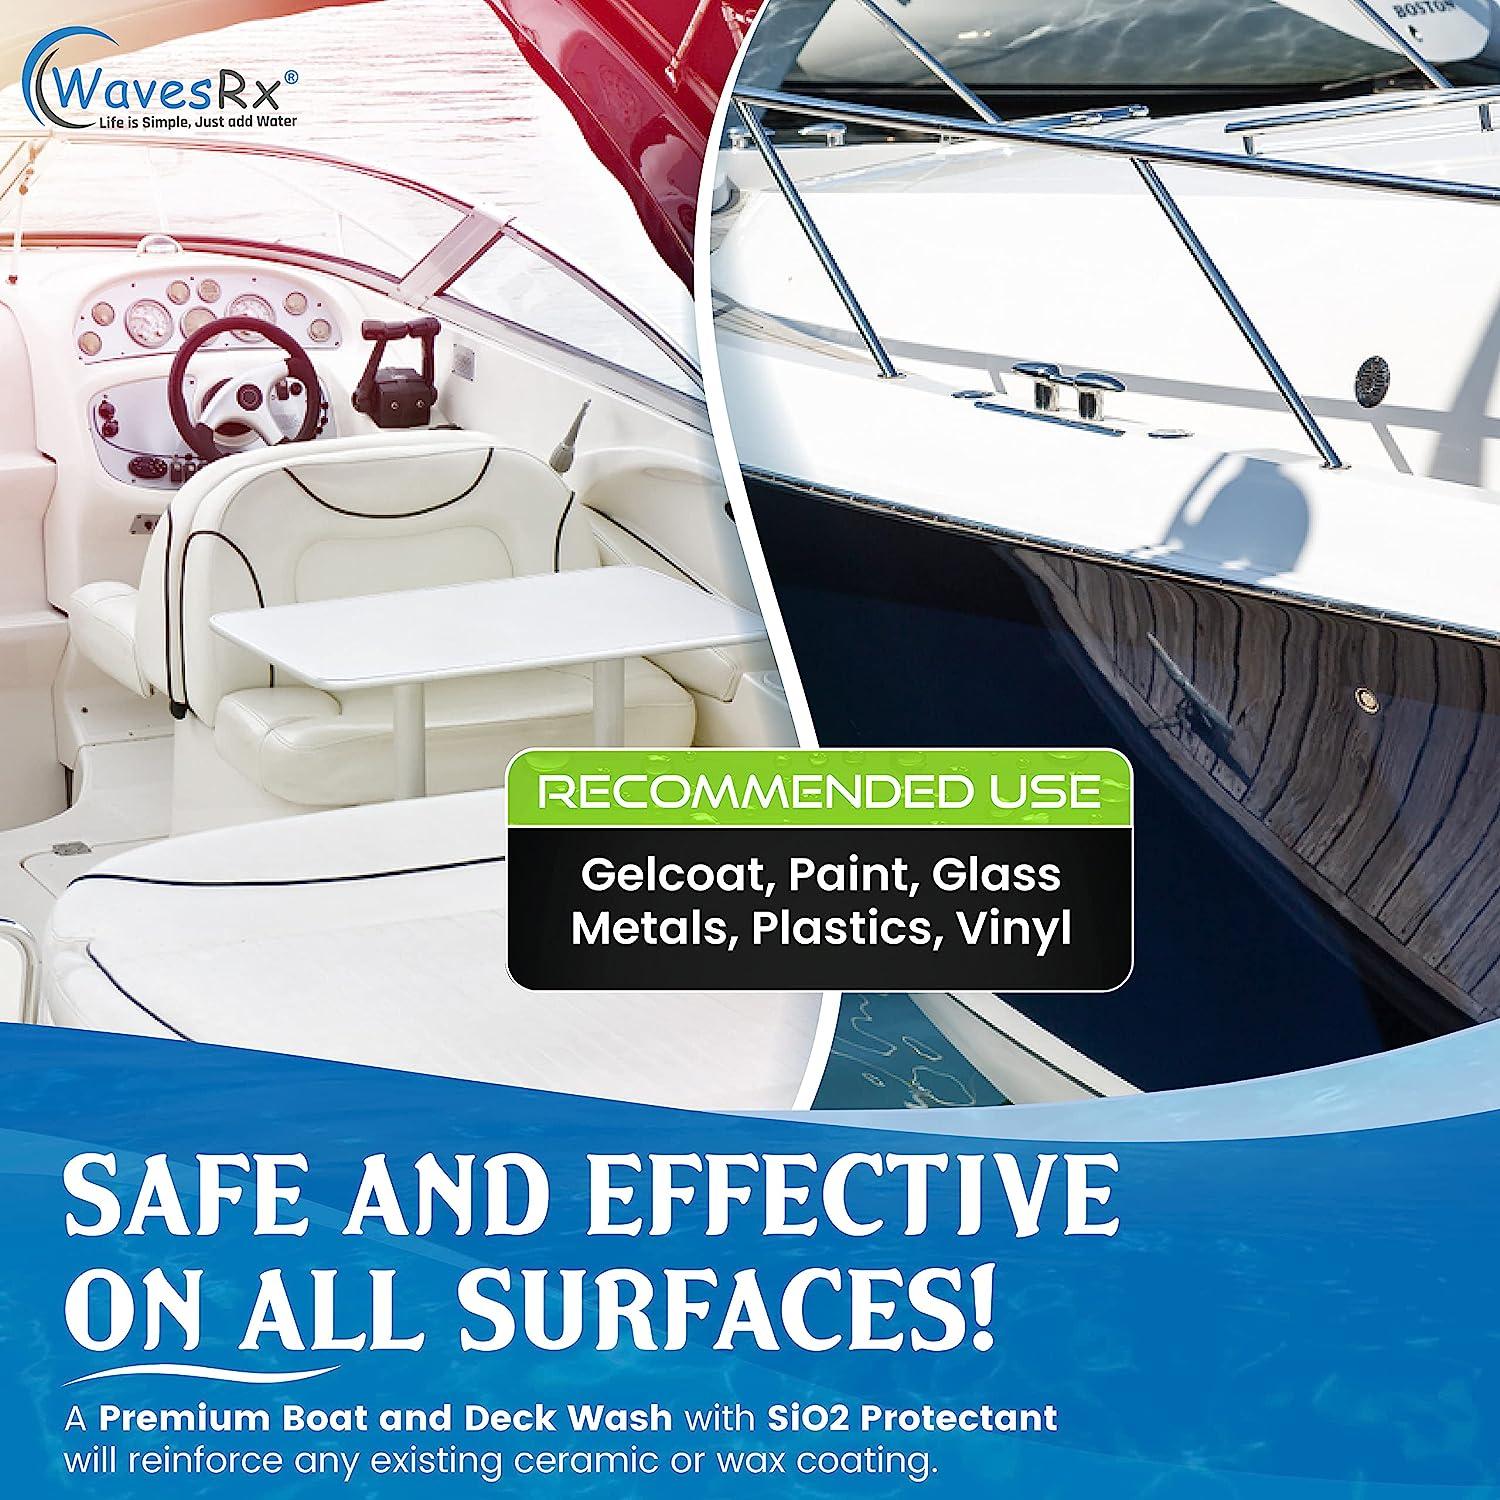 WAVESRX Salt Neutralizing Boat Soap & Jet Ski Wash with SiO2 Surface  Protection (EpicWash+), Marine Grade Cleaner Removes Salt & Contaminants